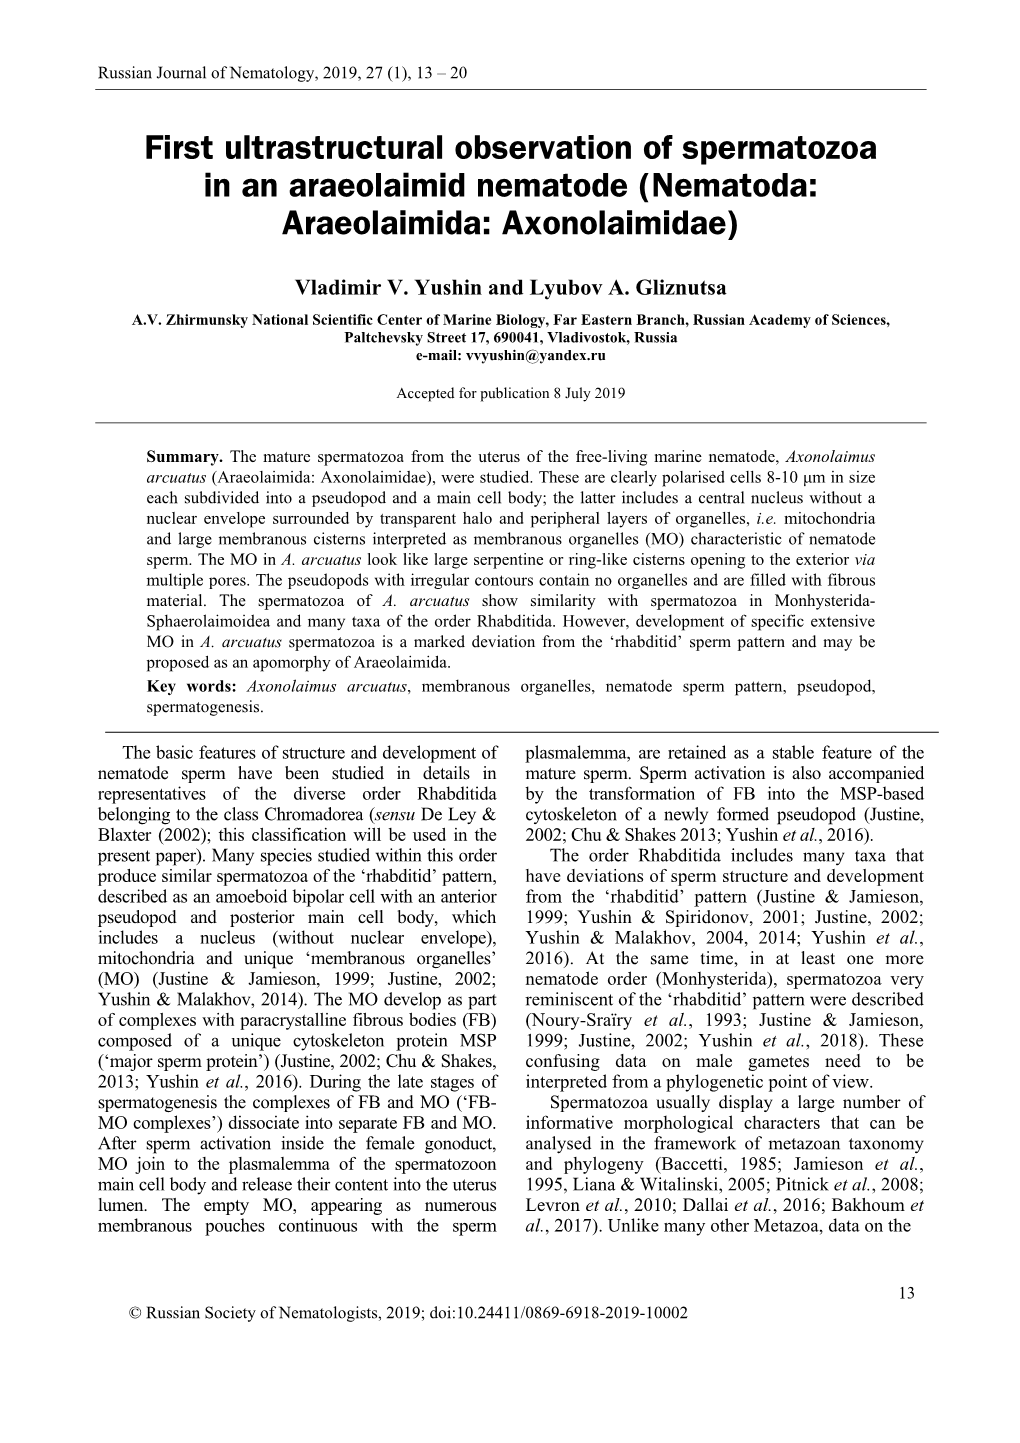 First Ultrastructural Observation of Spermatozoa in an Araeolaimid Nematode (Nematoda: Araeolaimida: Axonolaimidae)